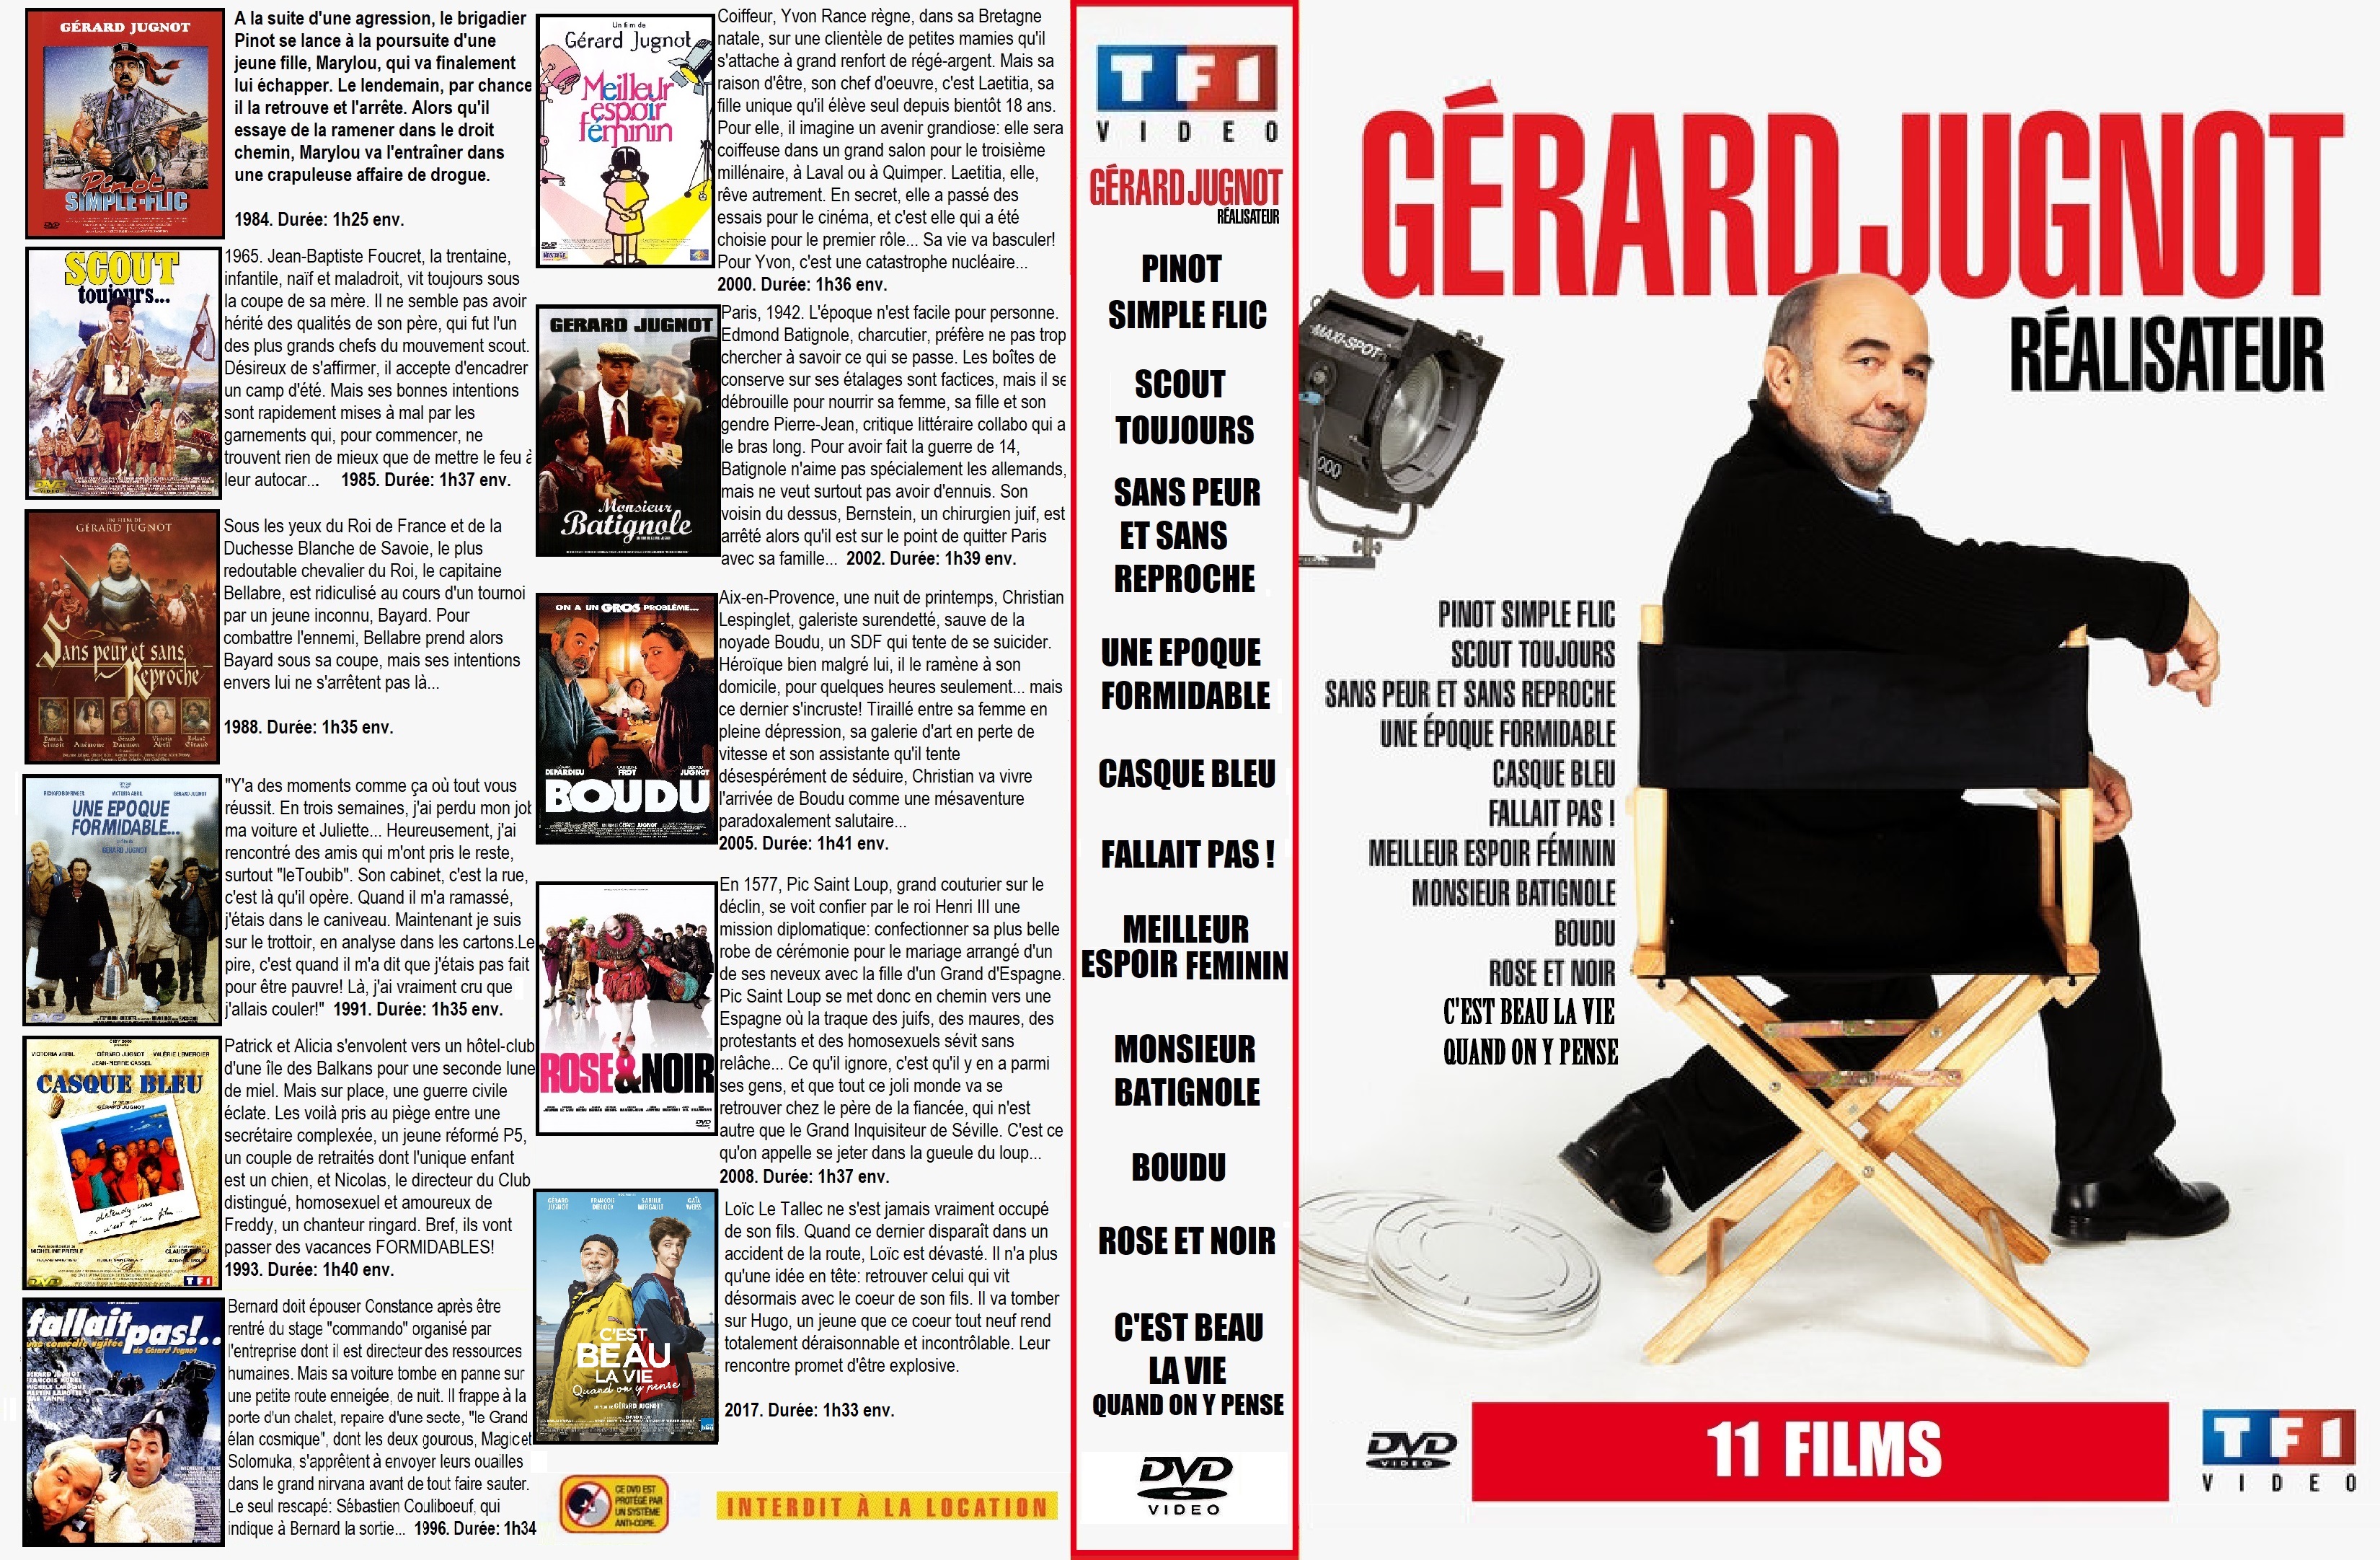 Jaquette DVD Gerard Jugnot realisateur 11 films custom